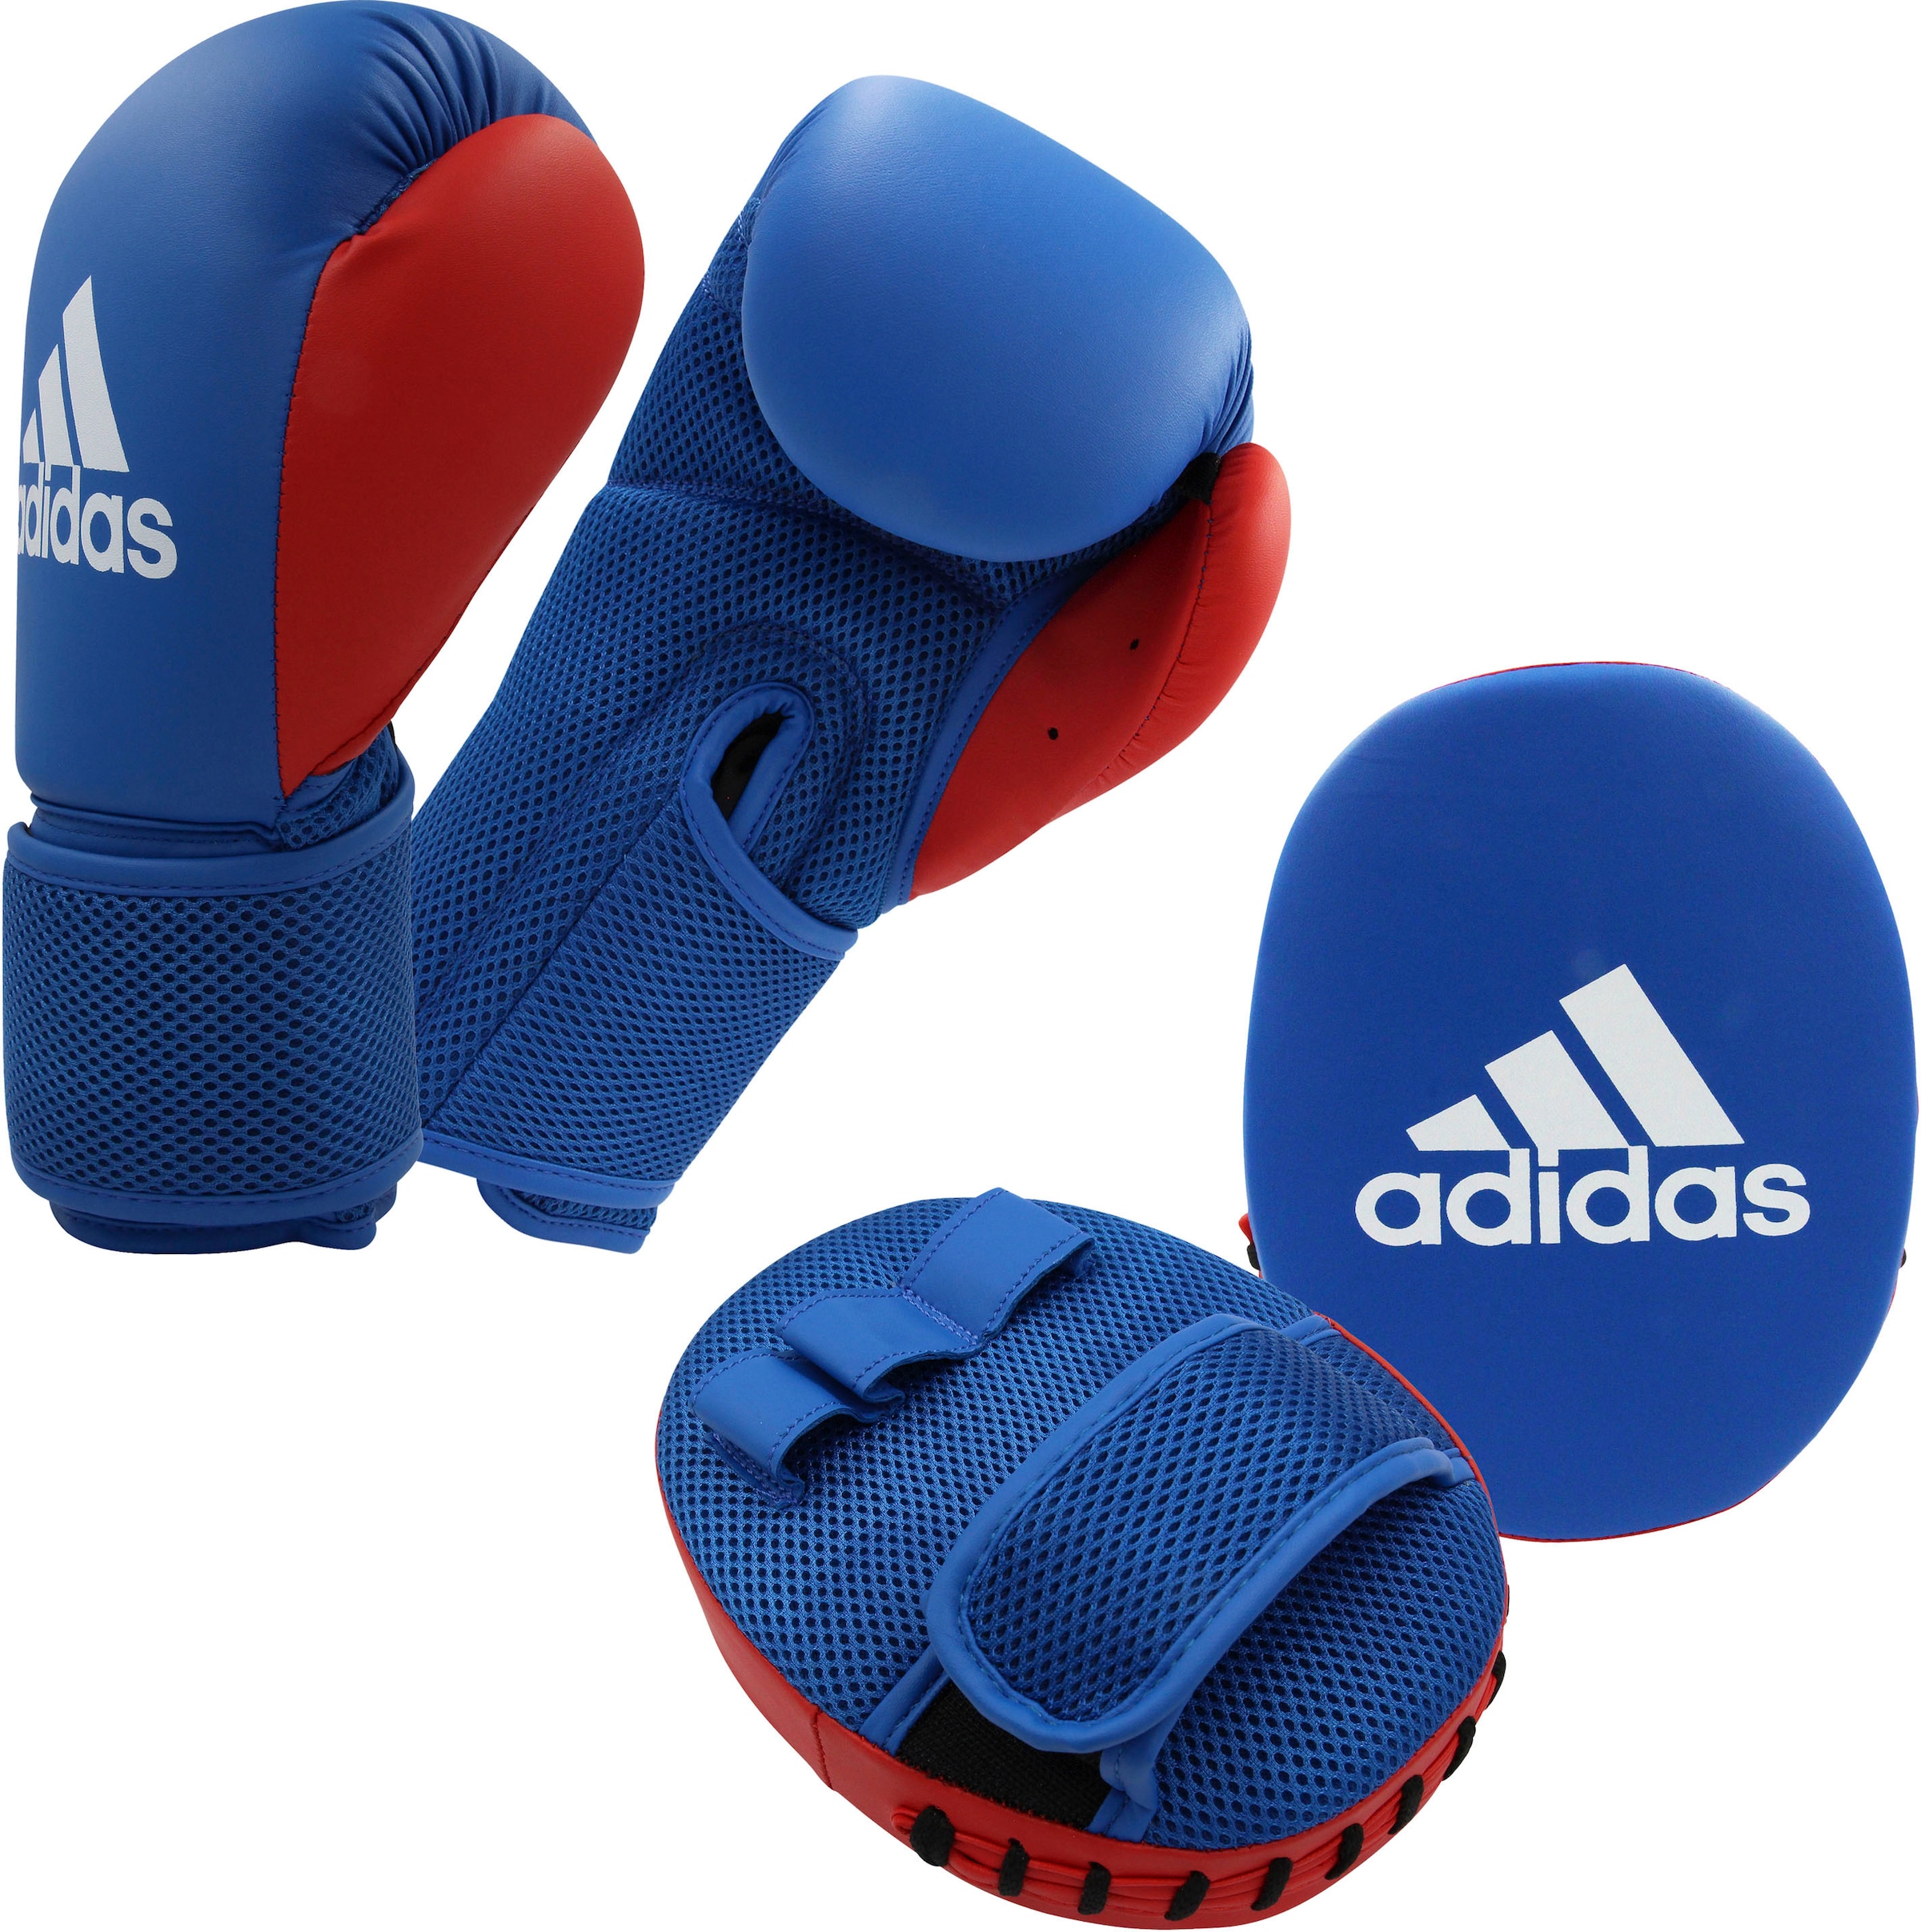 2« bei Kit »Kids Boxing Pratze Performance adidas